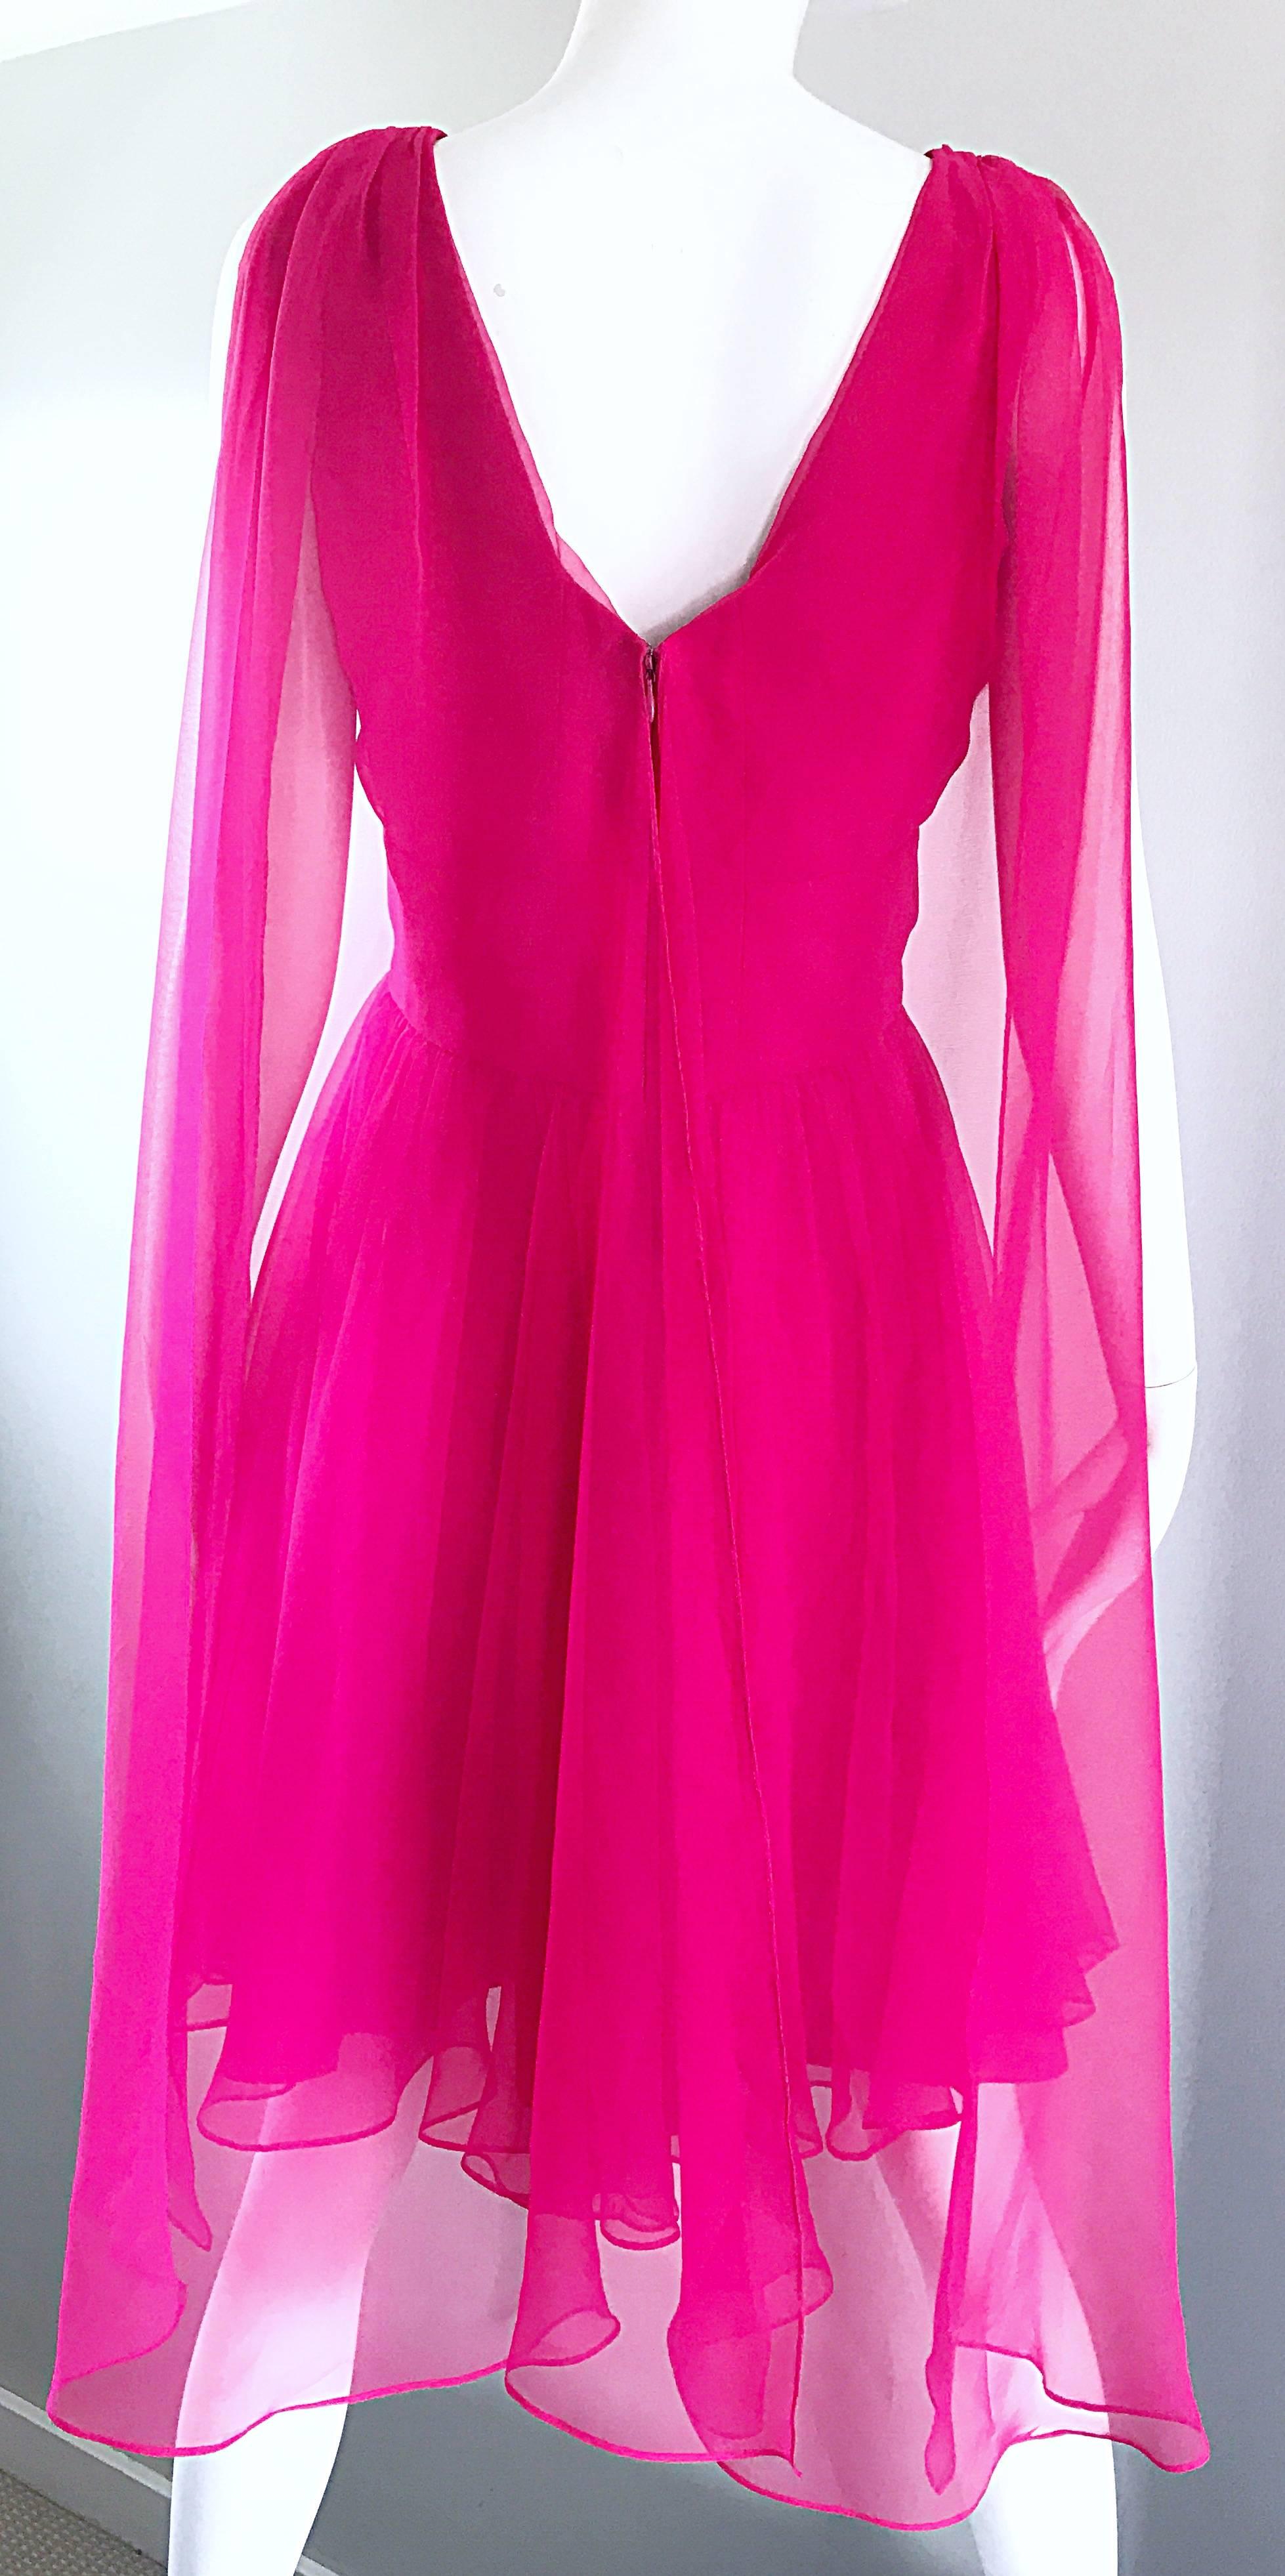 Women's Amazing 1960s Hot Pink Chiffon Sleeveless Vintage 60s Dress w/ Attached Cape 